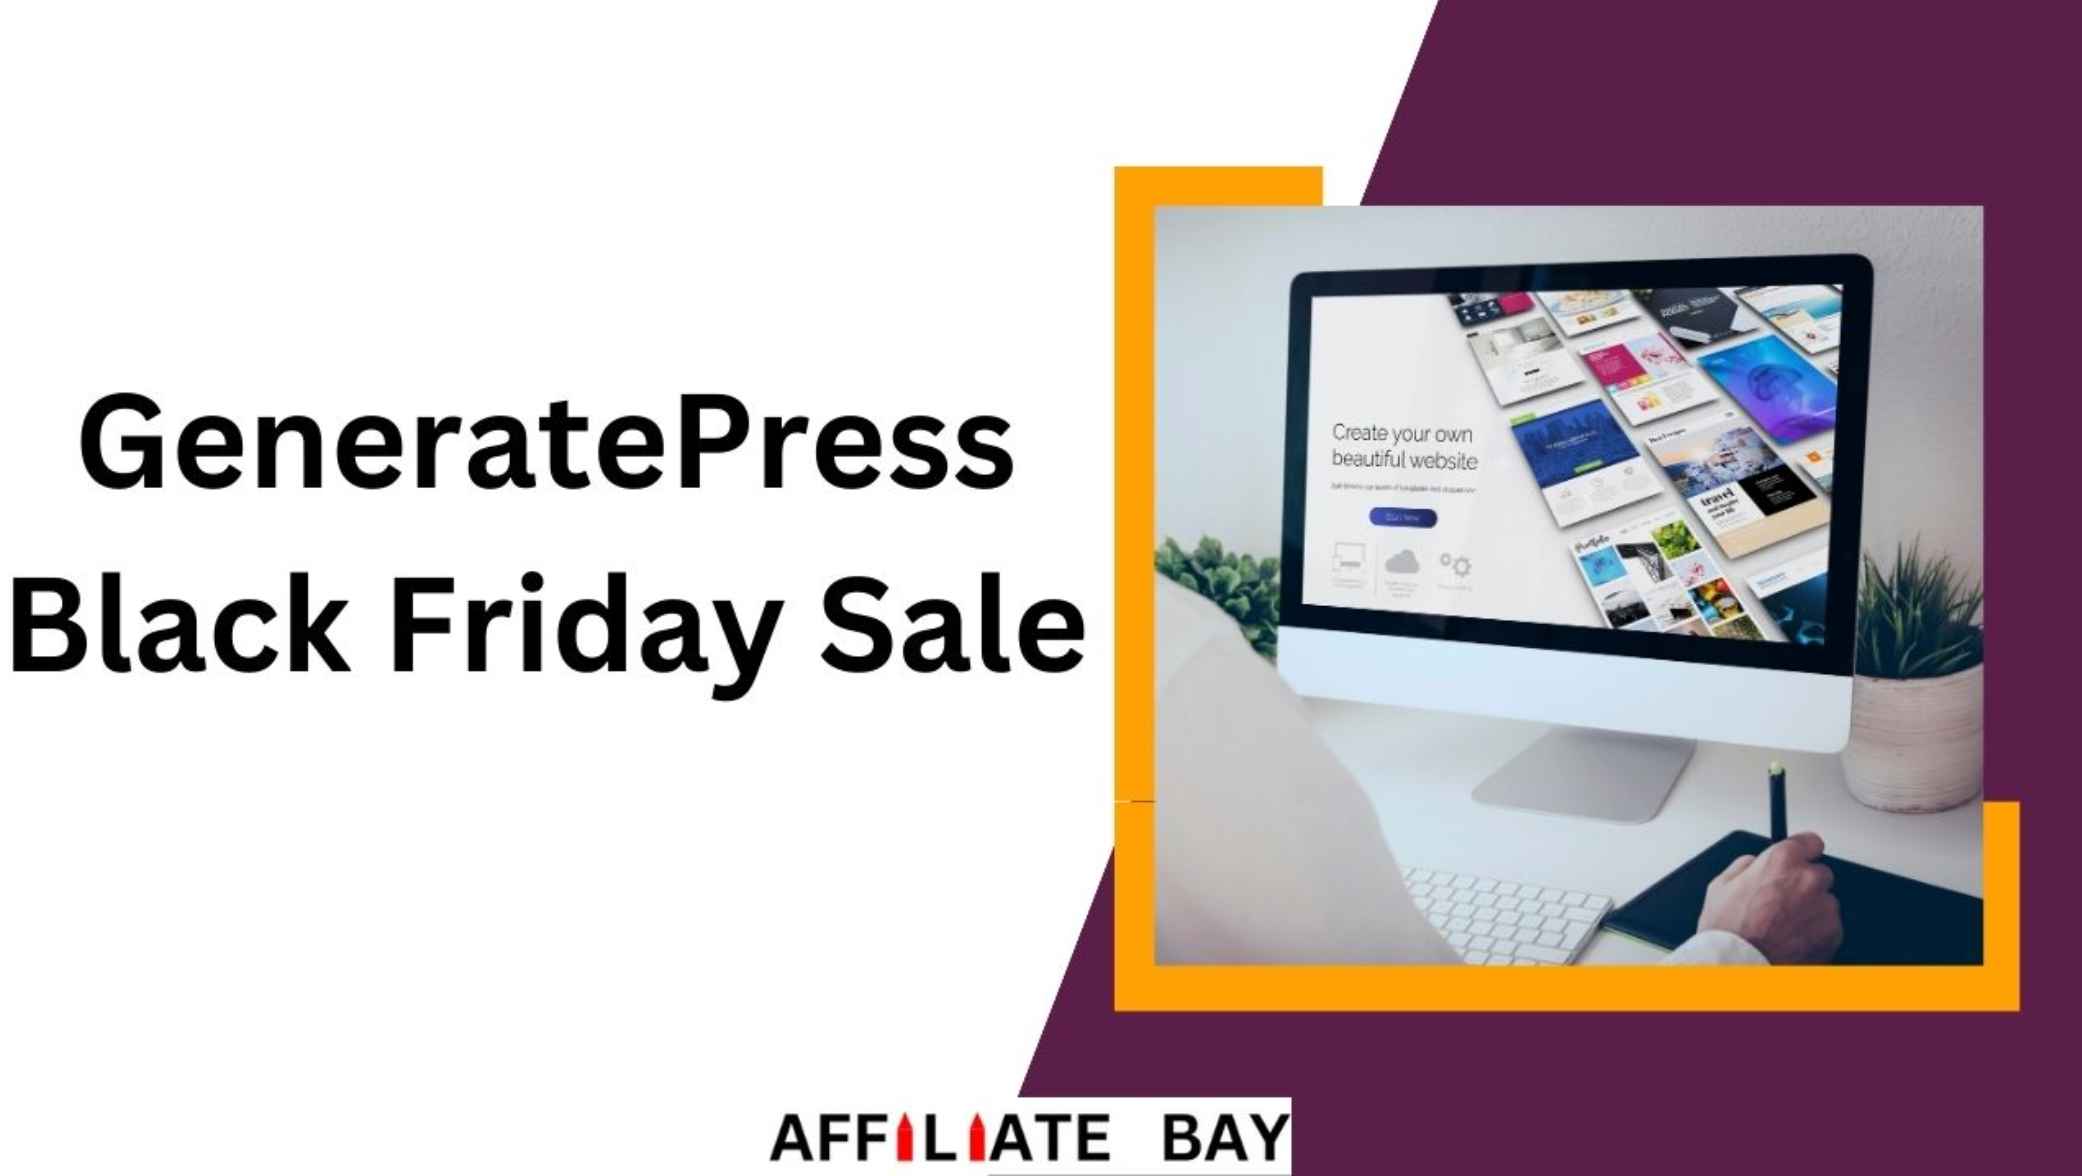 GeneratePress Black Friday Sale